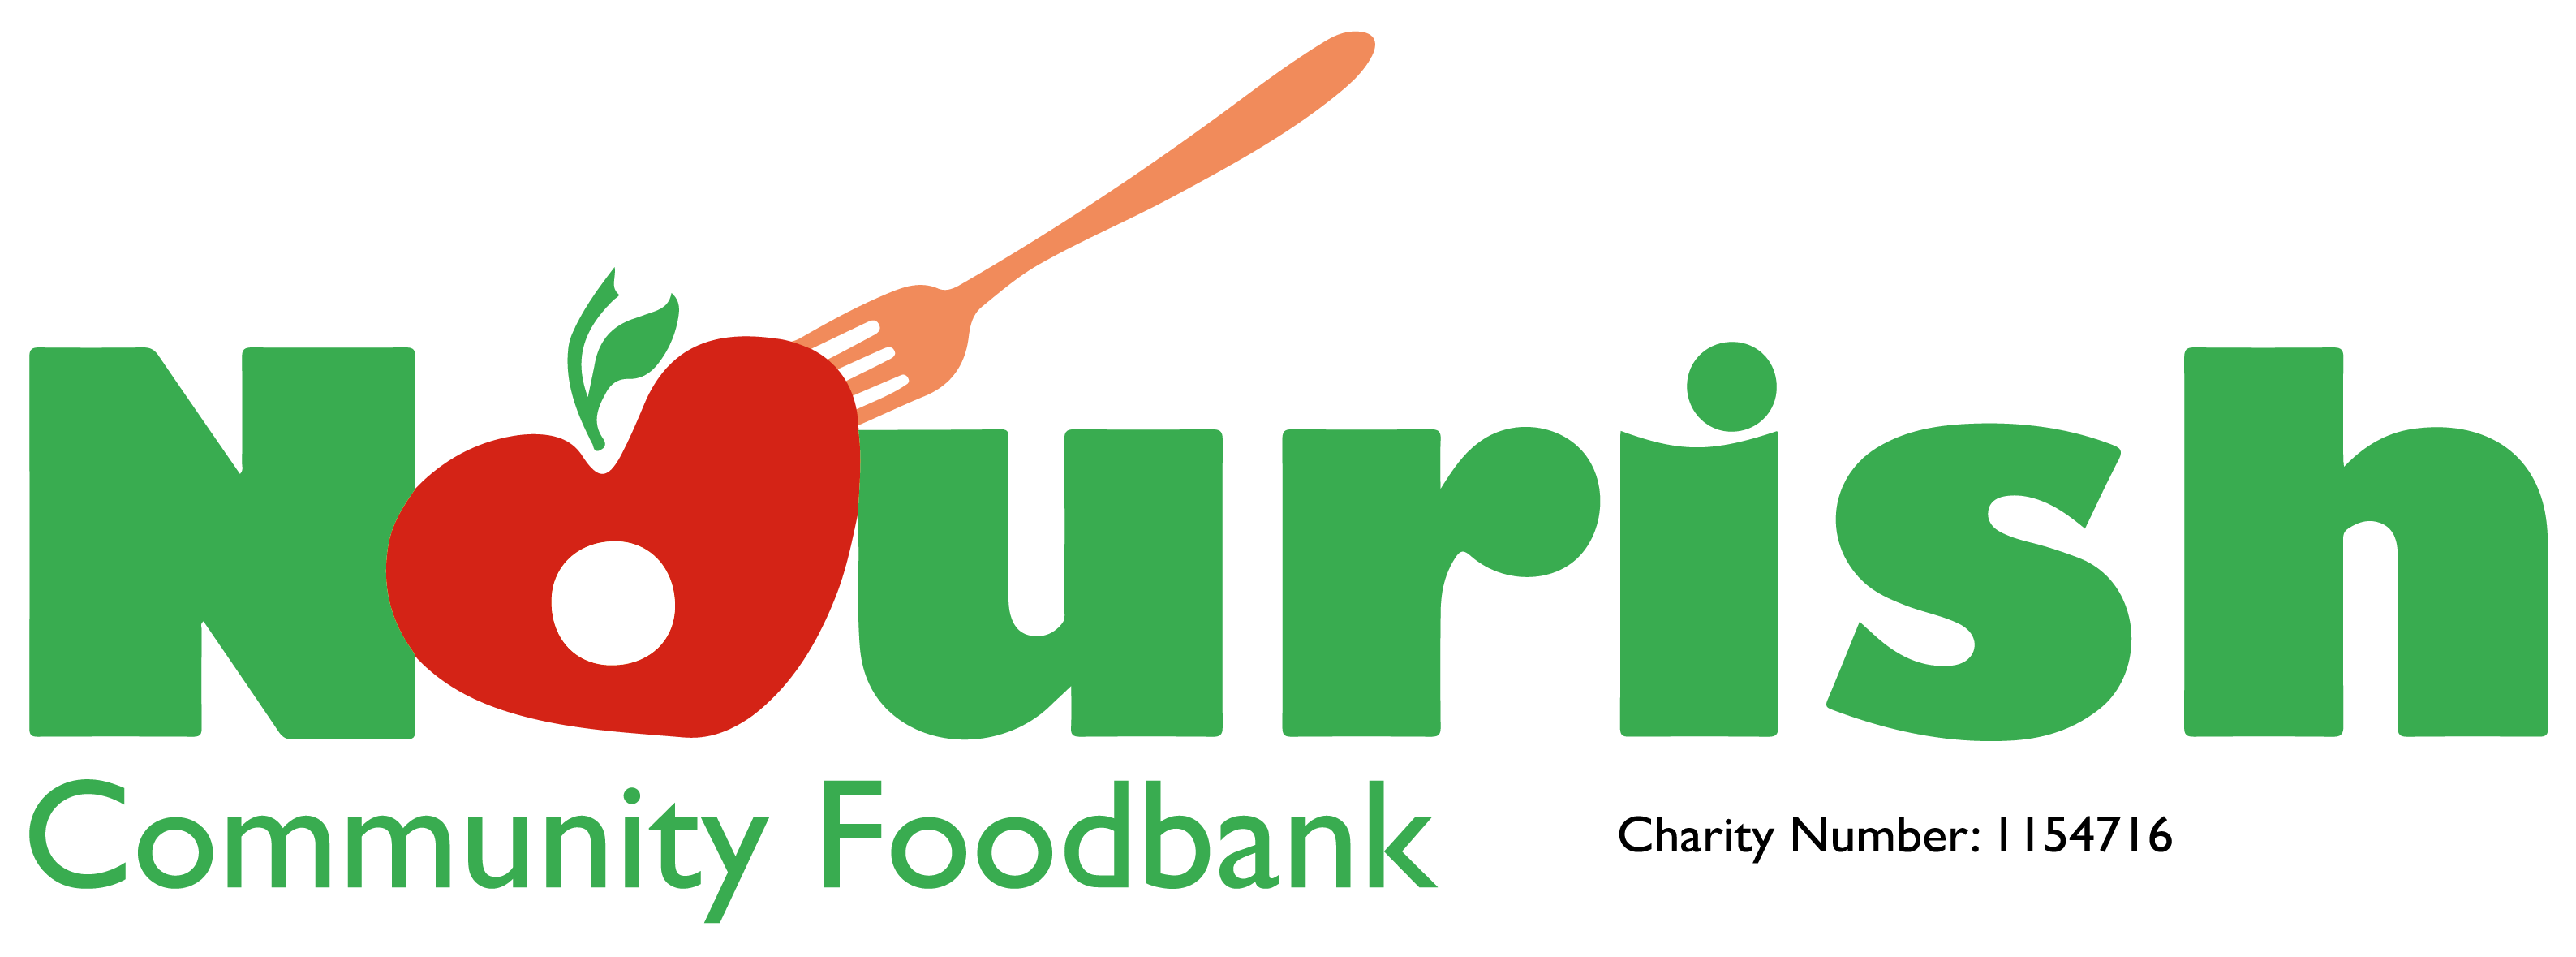 Nourish Community Foodbank eCards